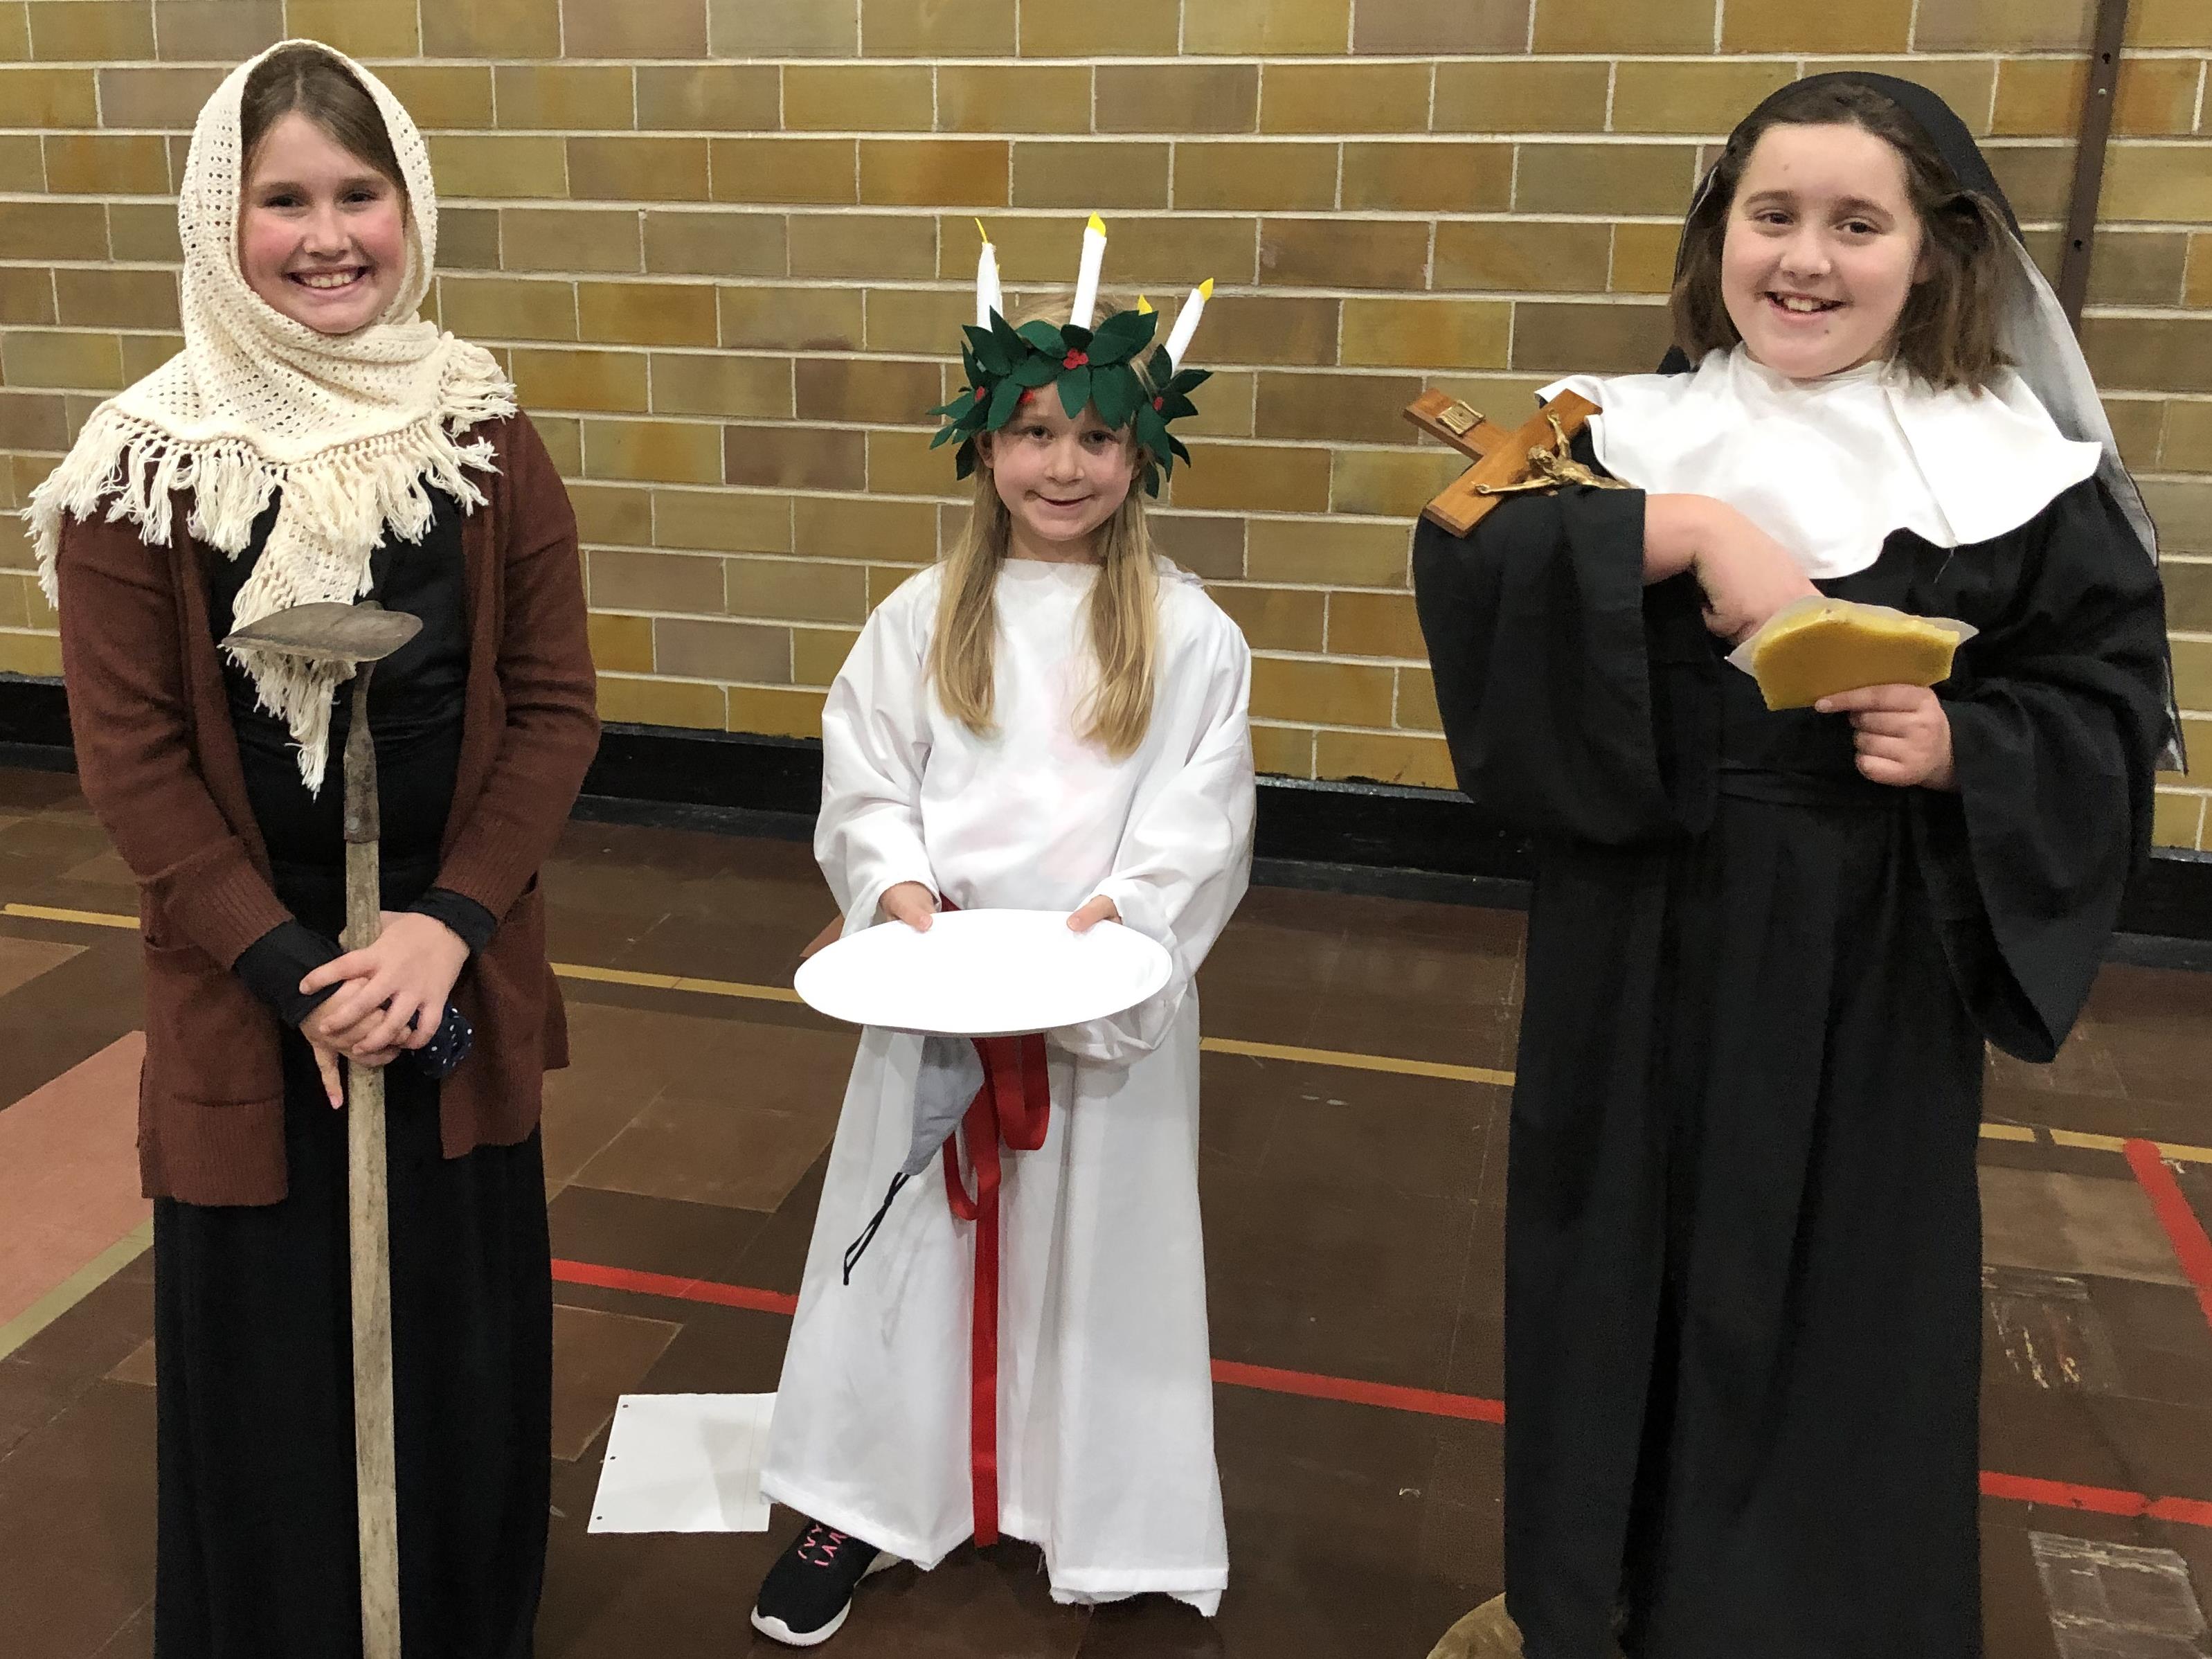 Three girls dressed as saints